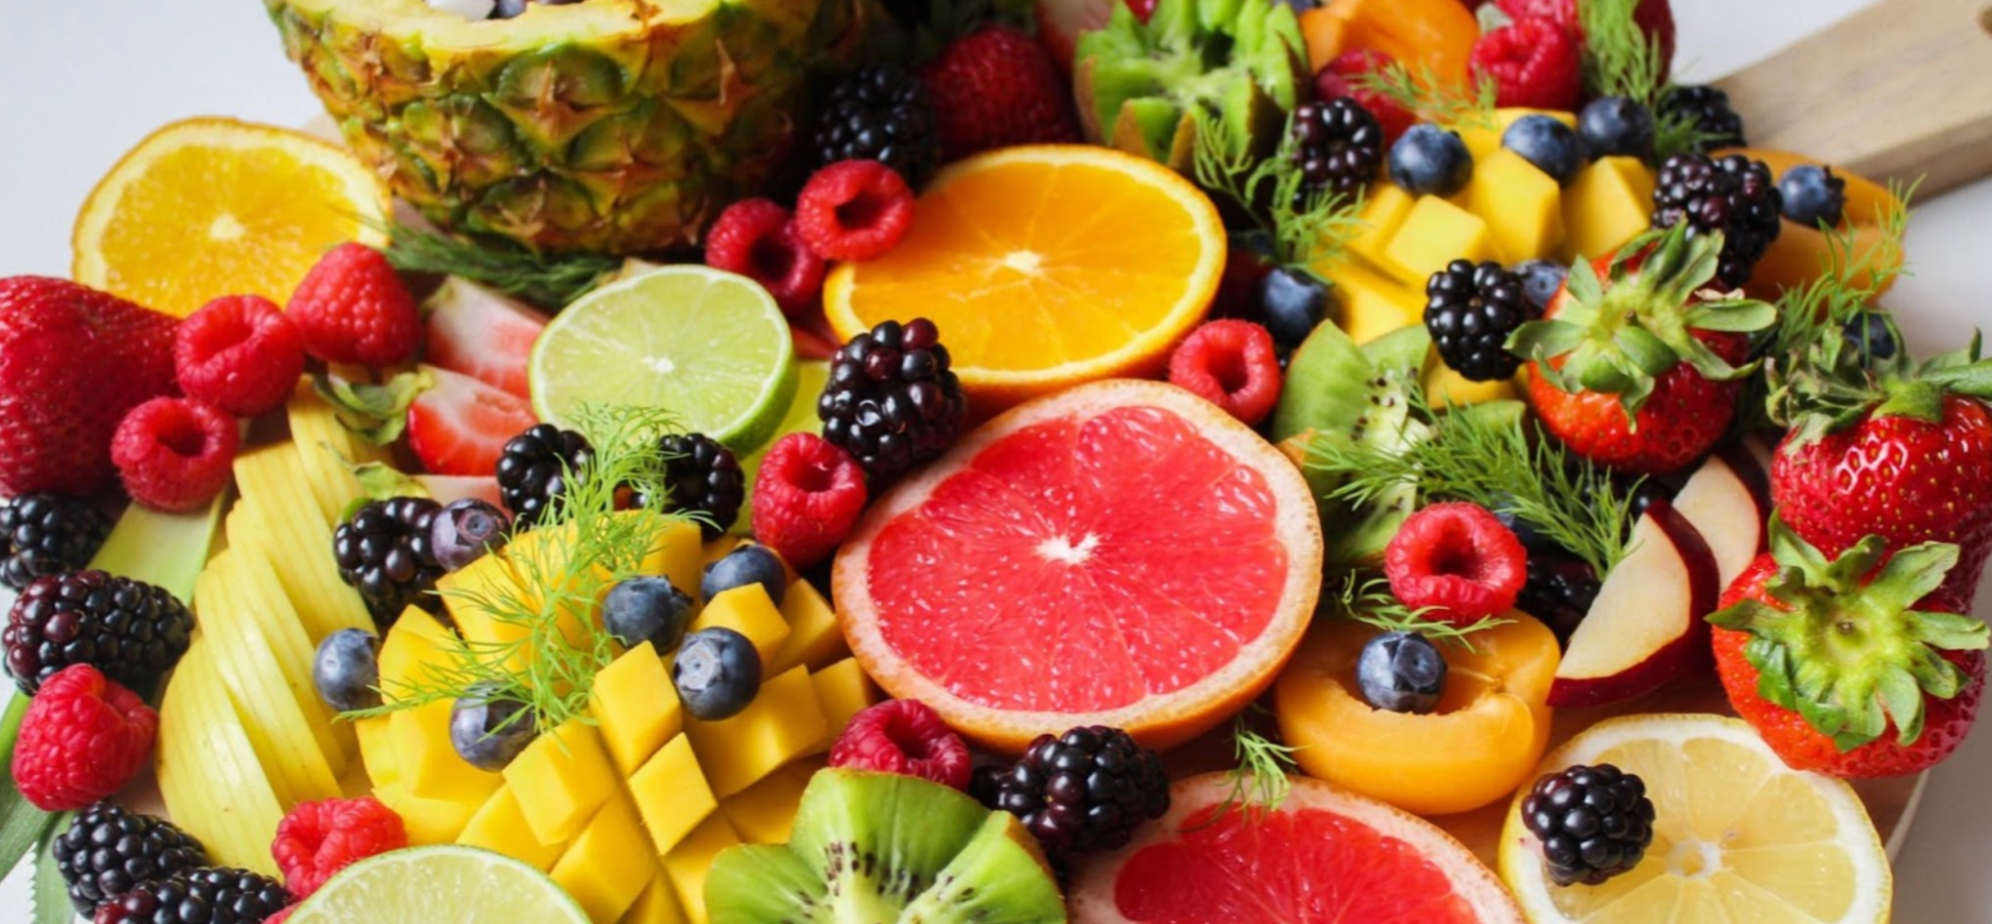 Medley of fruit containing vitamin A, including lemons, oranges, kiwis, blueberries, blackberries, strawberries, limes, raspberries and pineapple